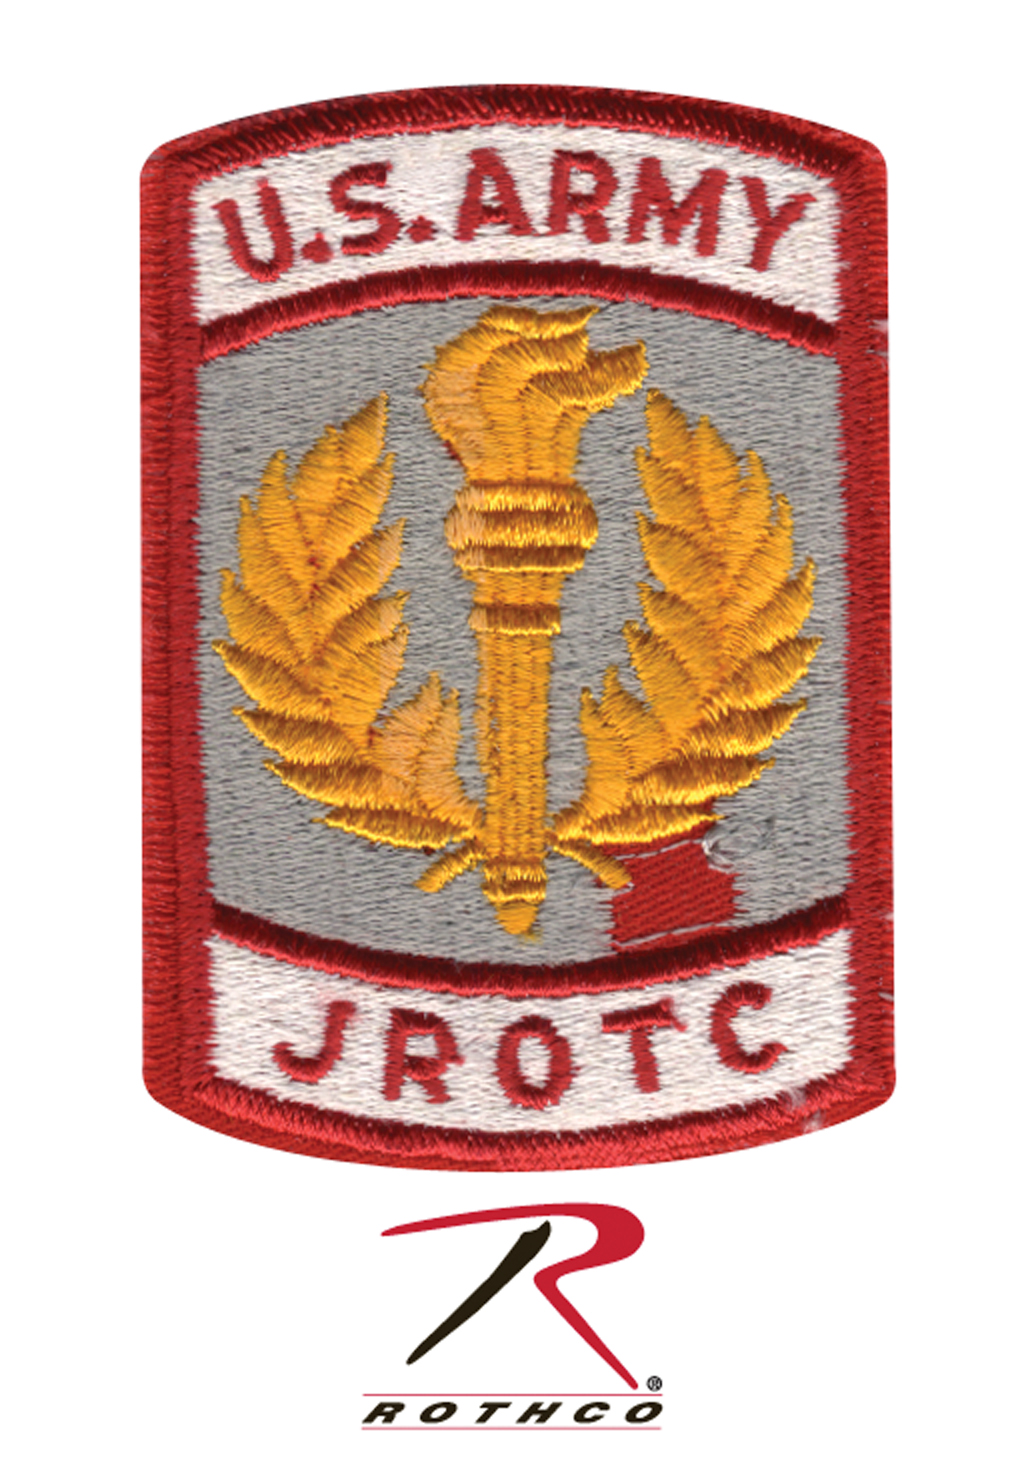 Rothco Patch - US Army JROTC